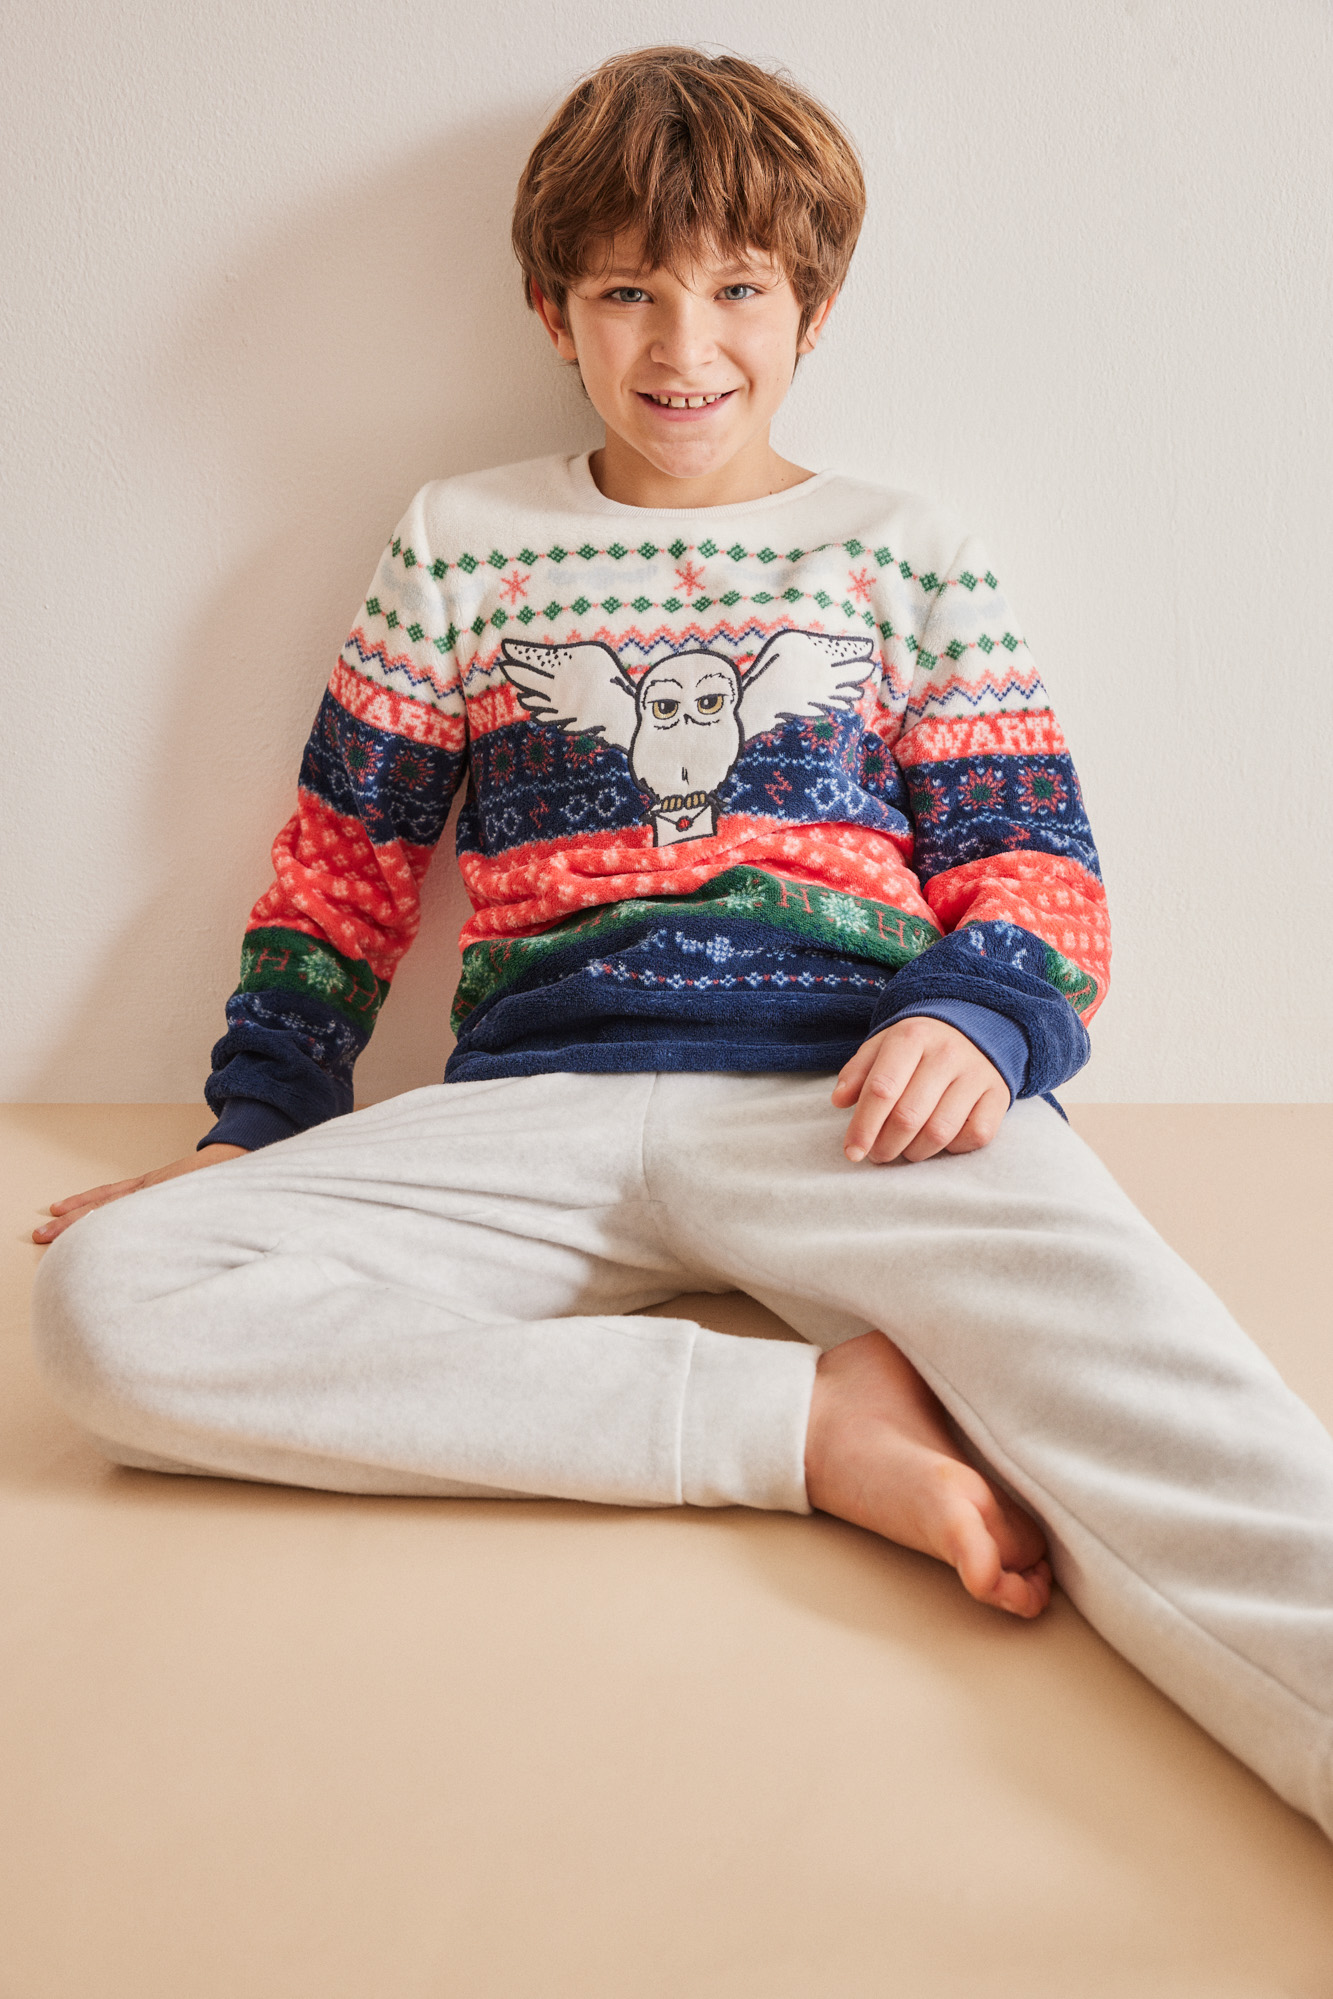 Pijama Harry Potter Infantil Niño Talla 10 años